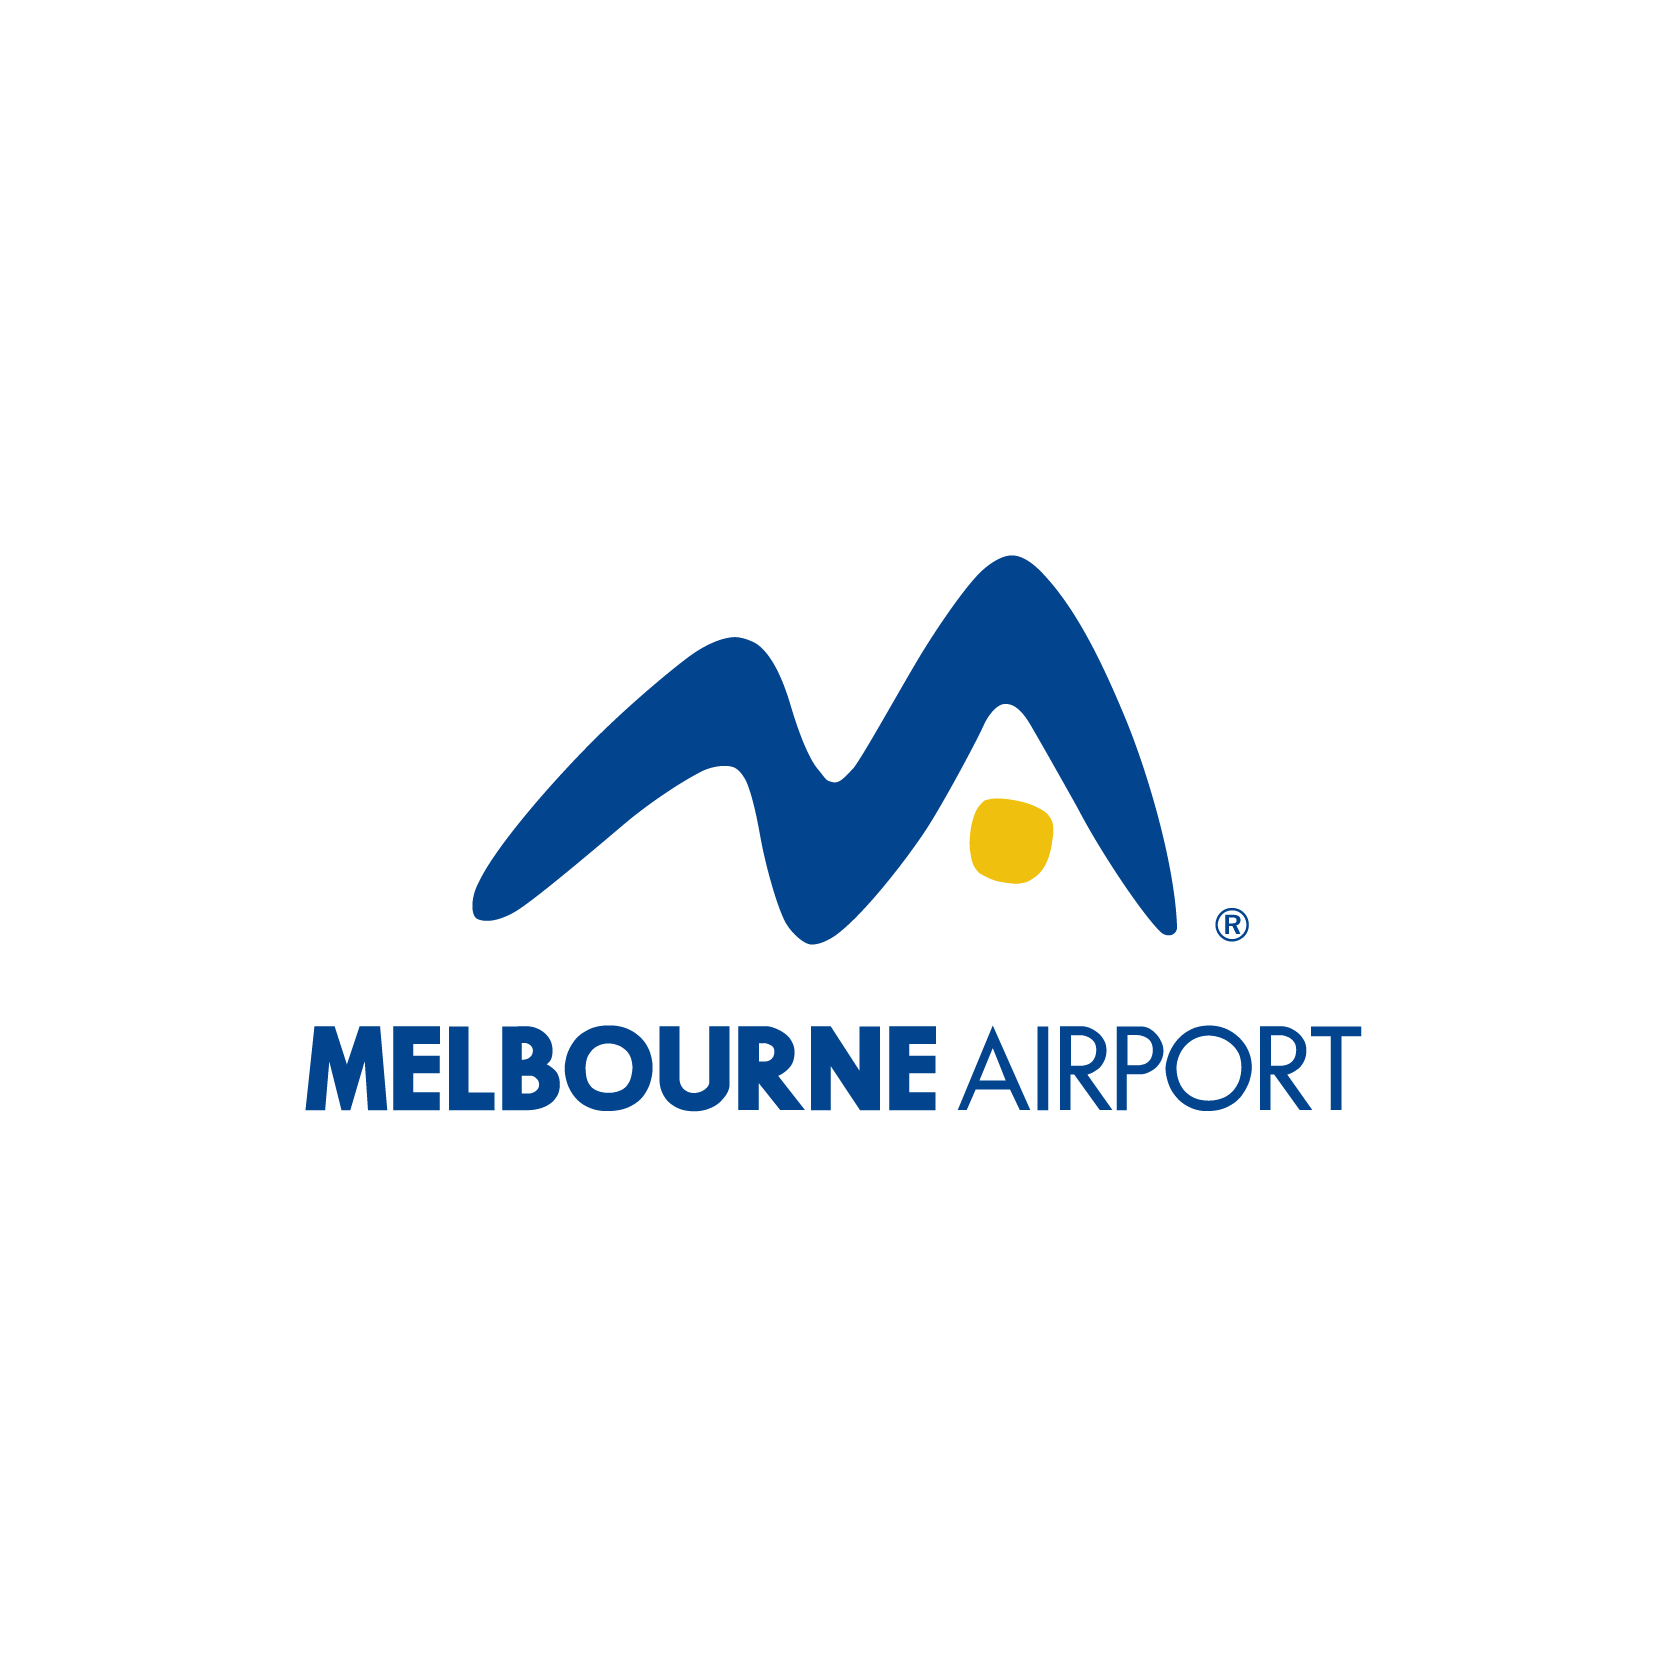 MELBOURNE AIRPORT logo